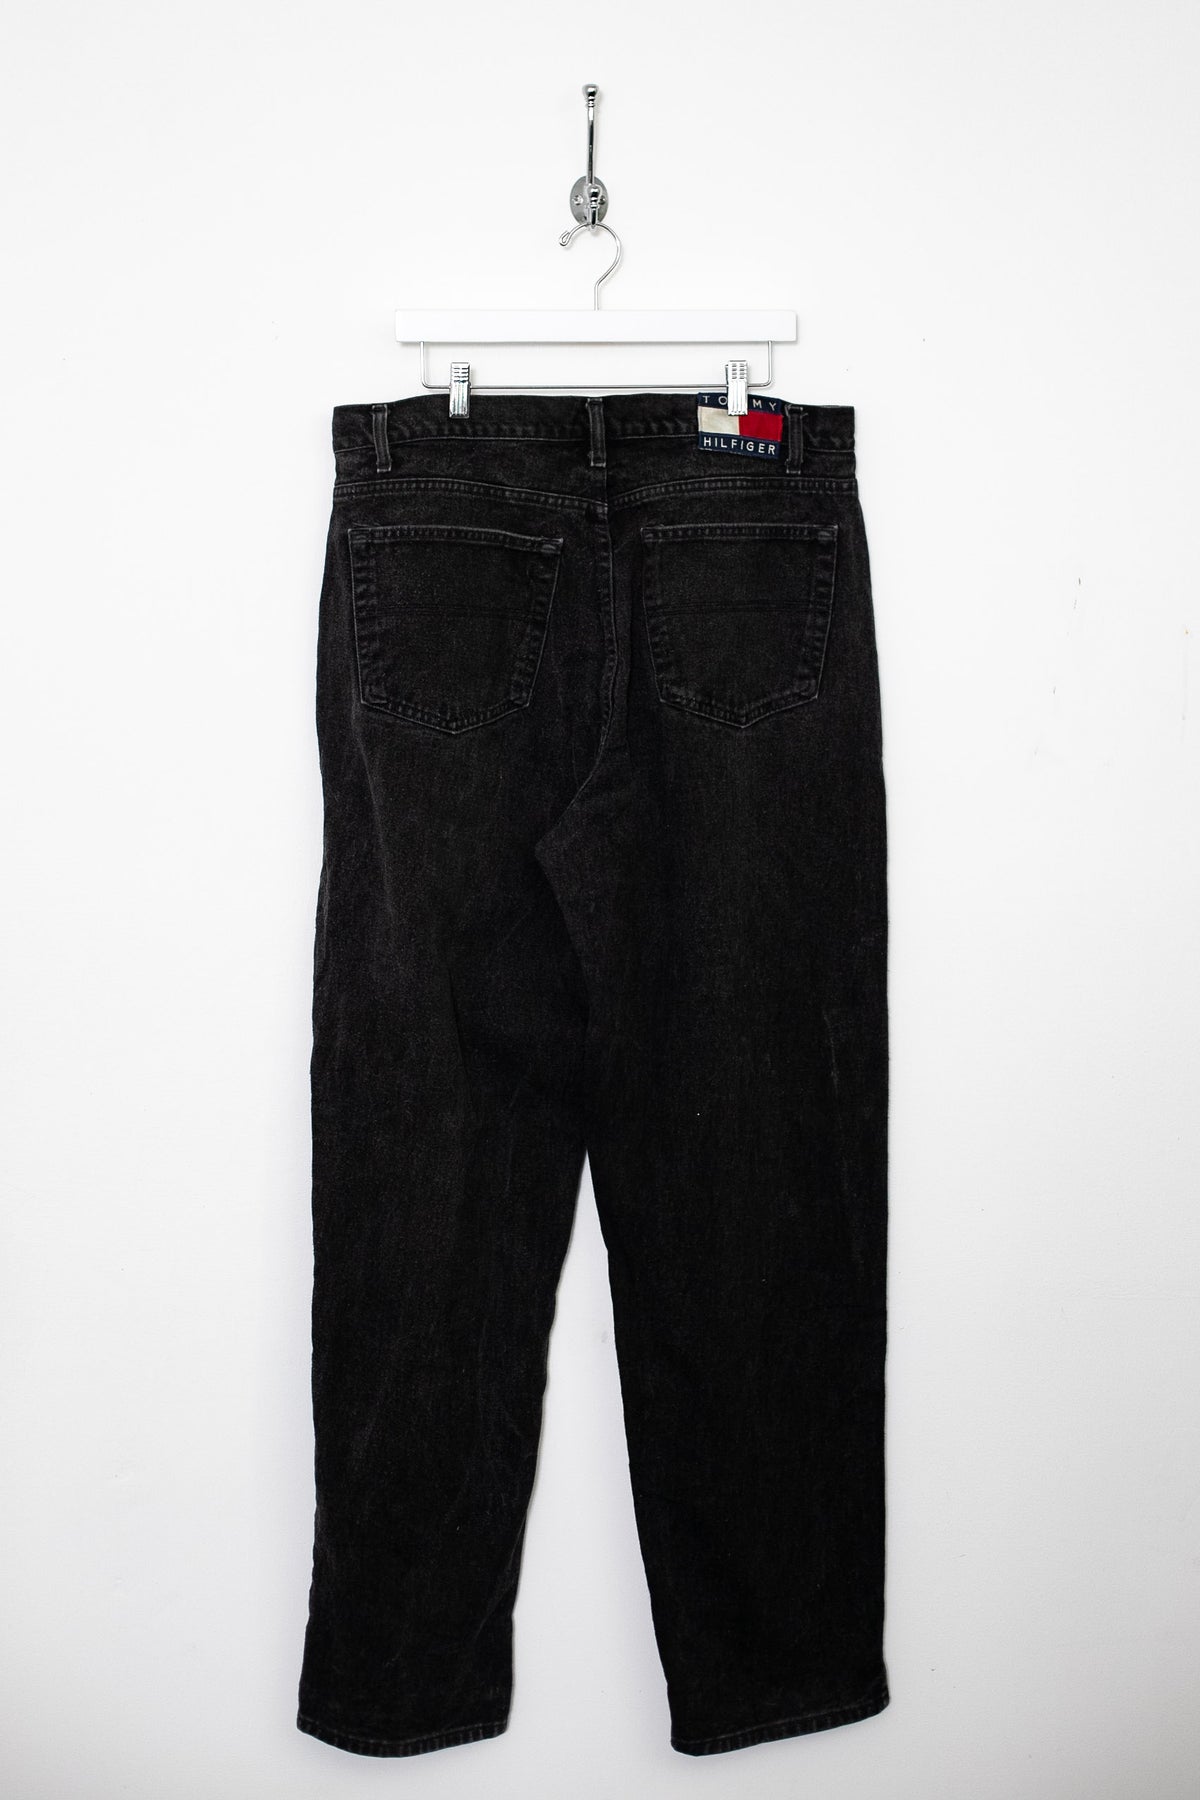 90s Tommy Hilfiger Jeans (XL)